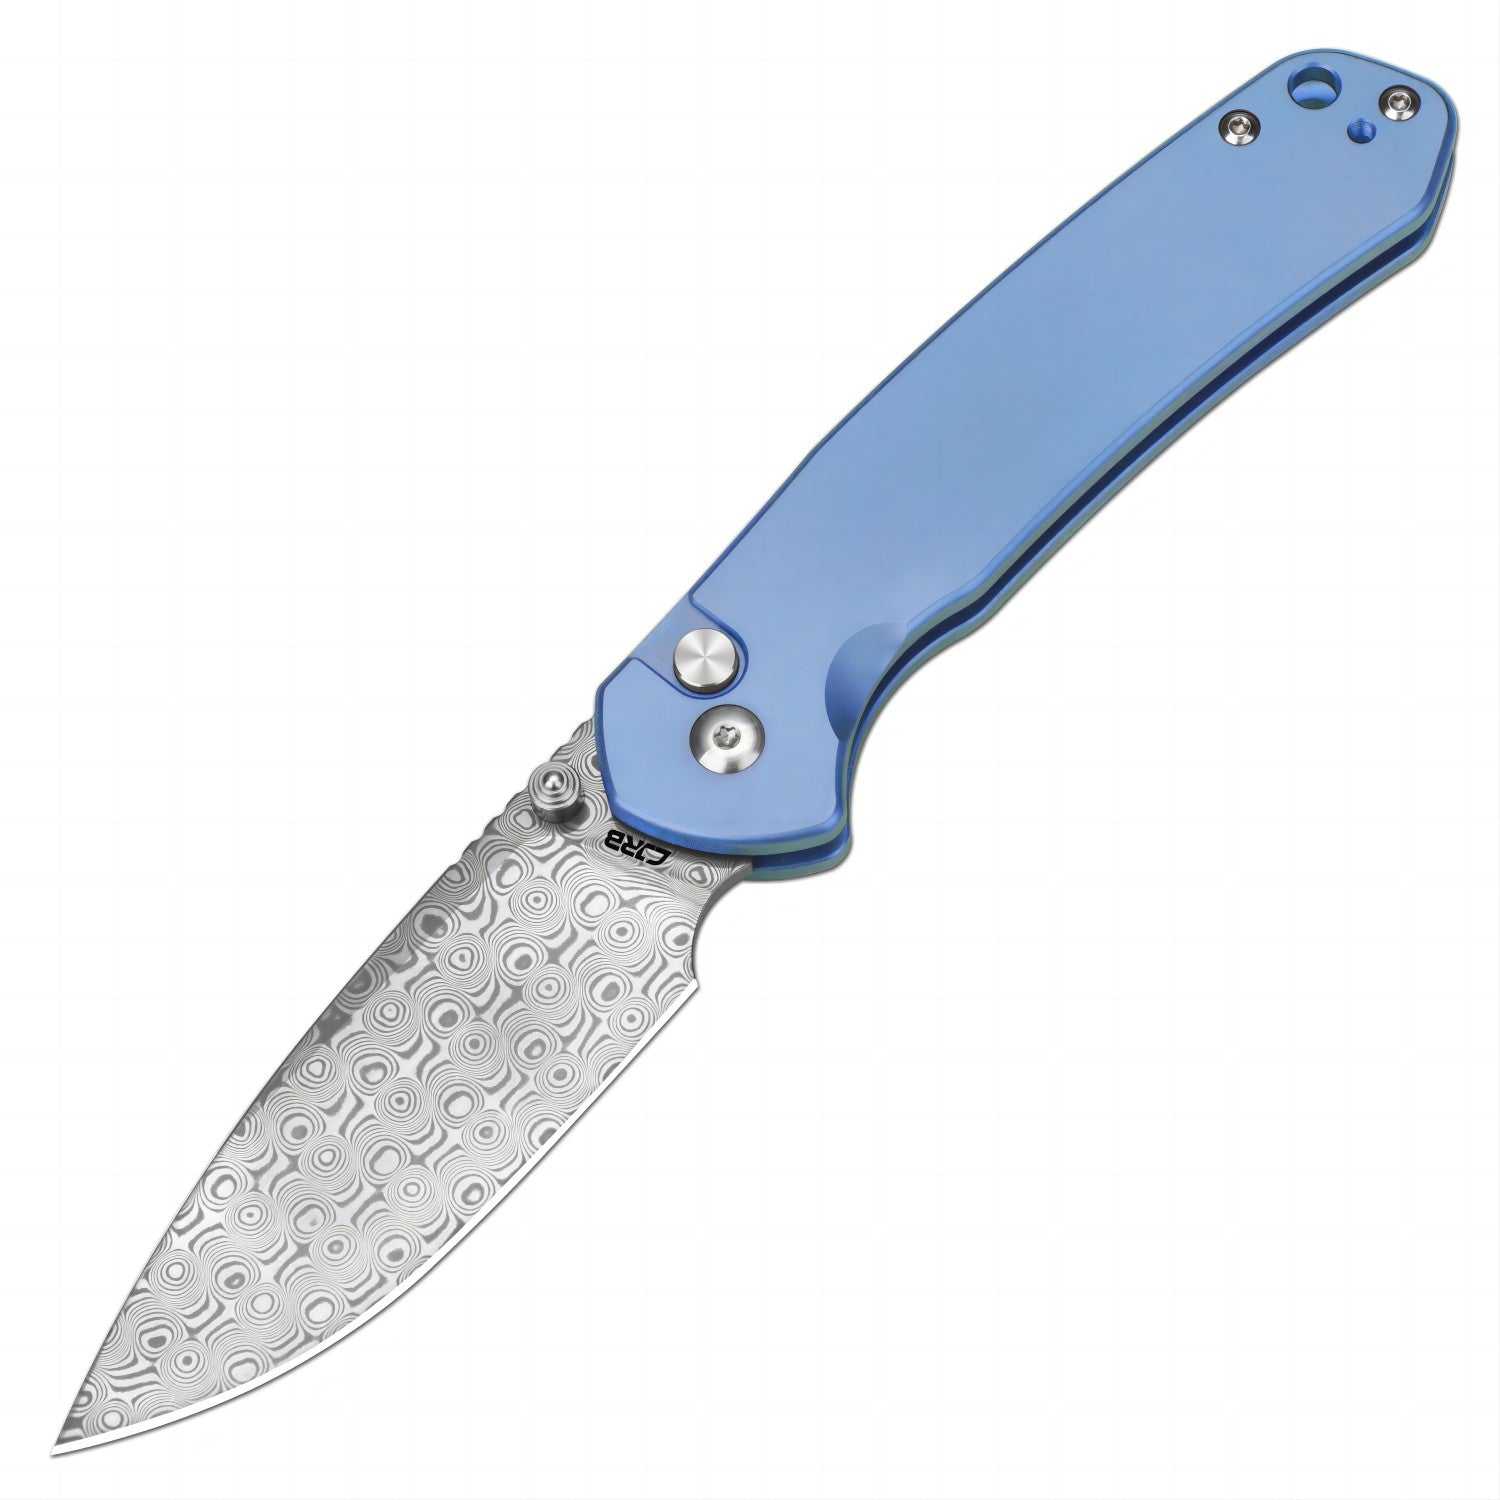 CJRB Pyrite Damascus Blade Folding Knives - Titanium Handle